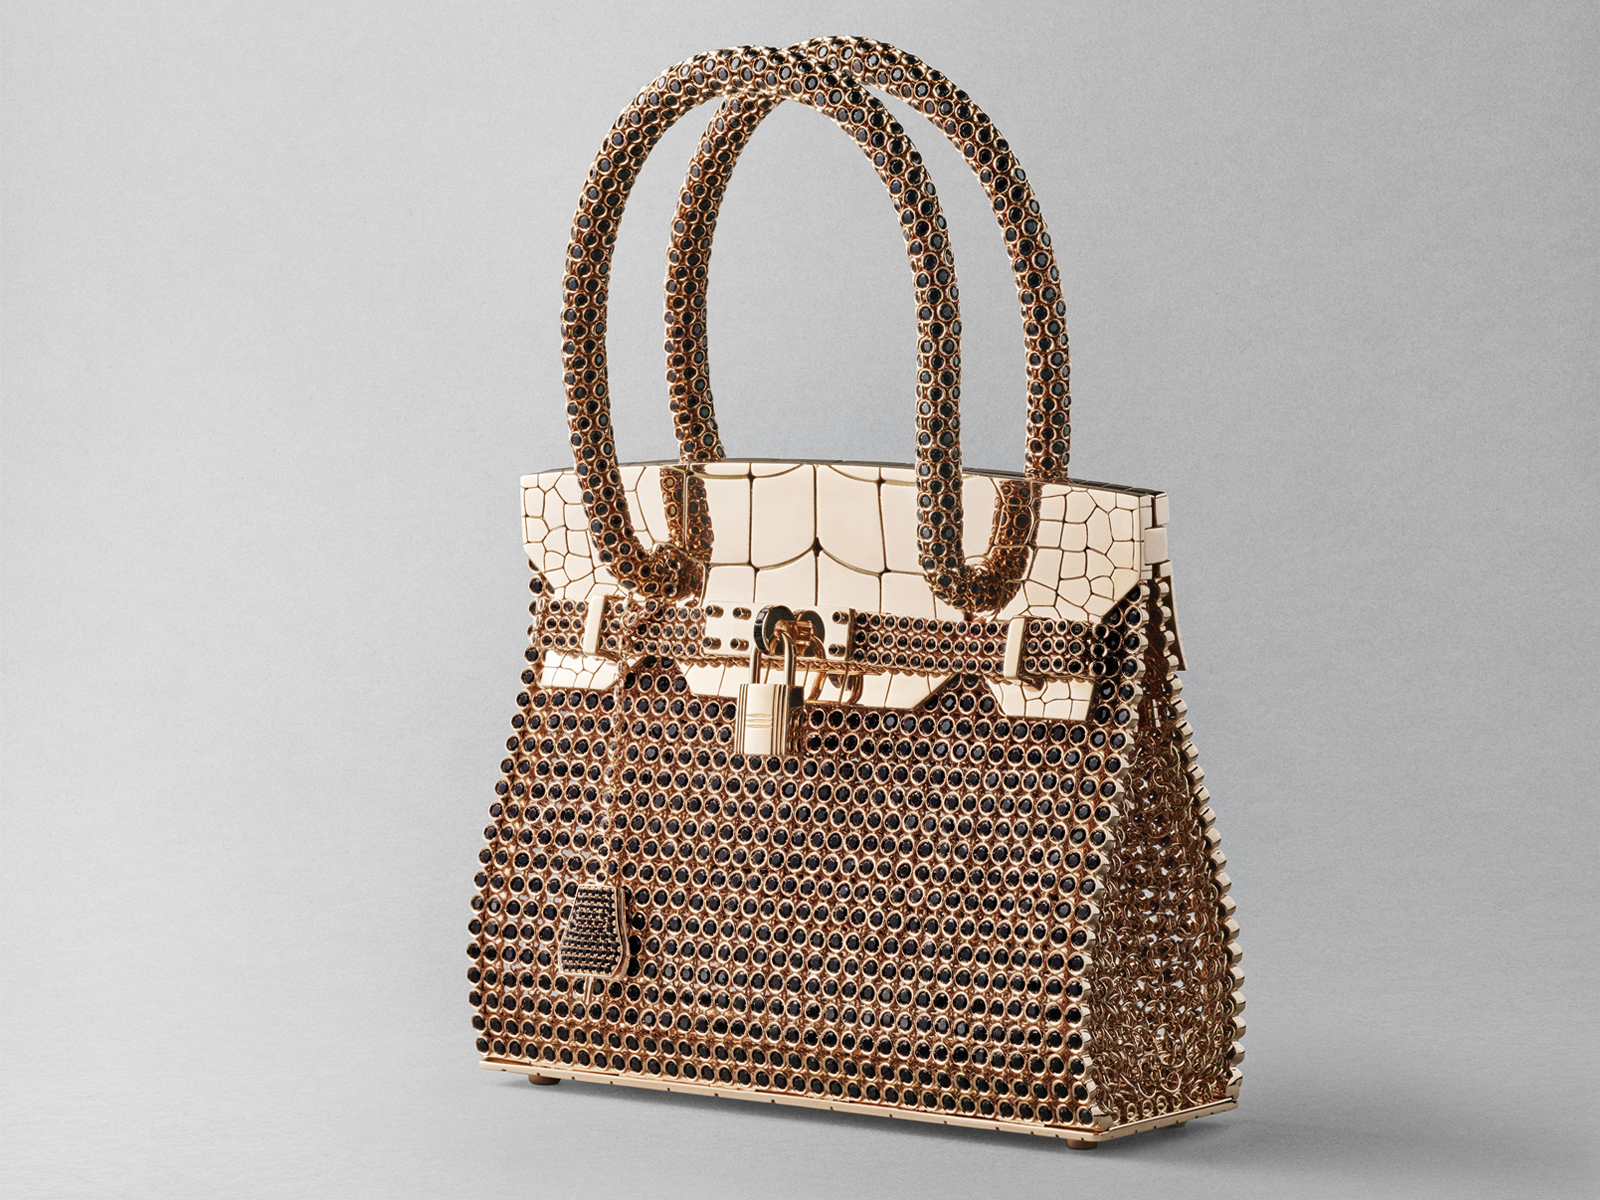 The Most Expensive Hermès Birkin Bag